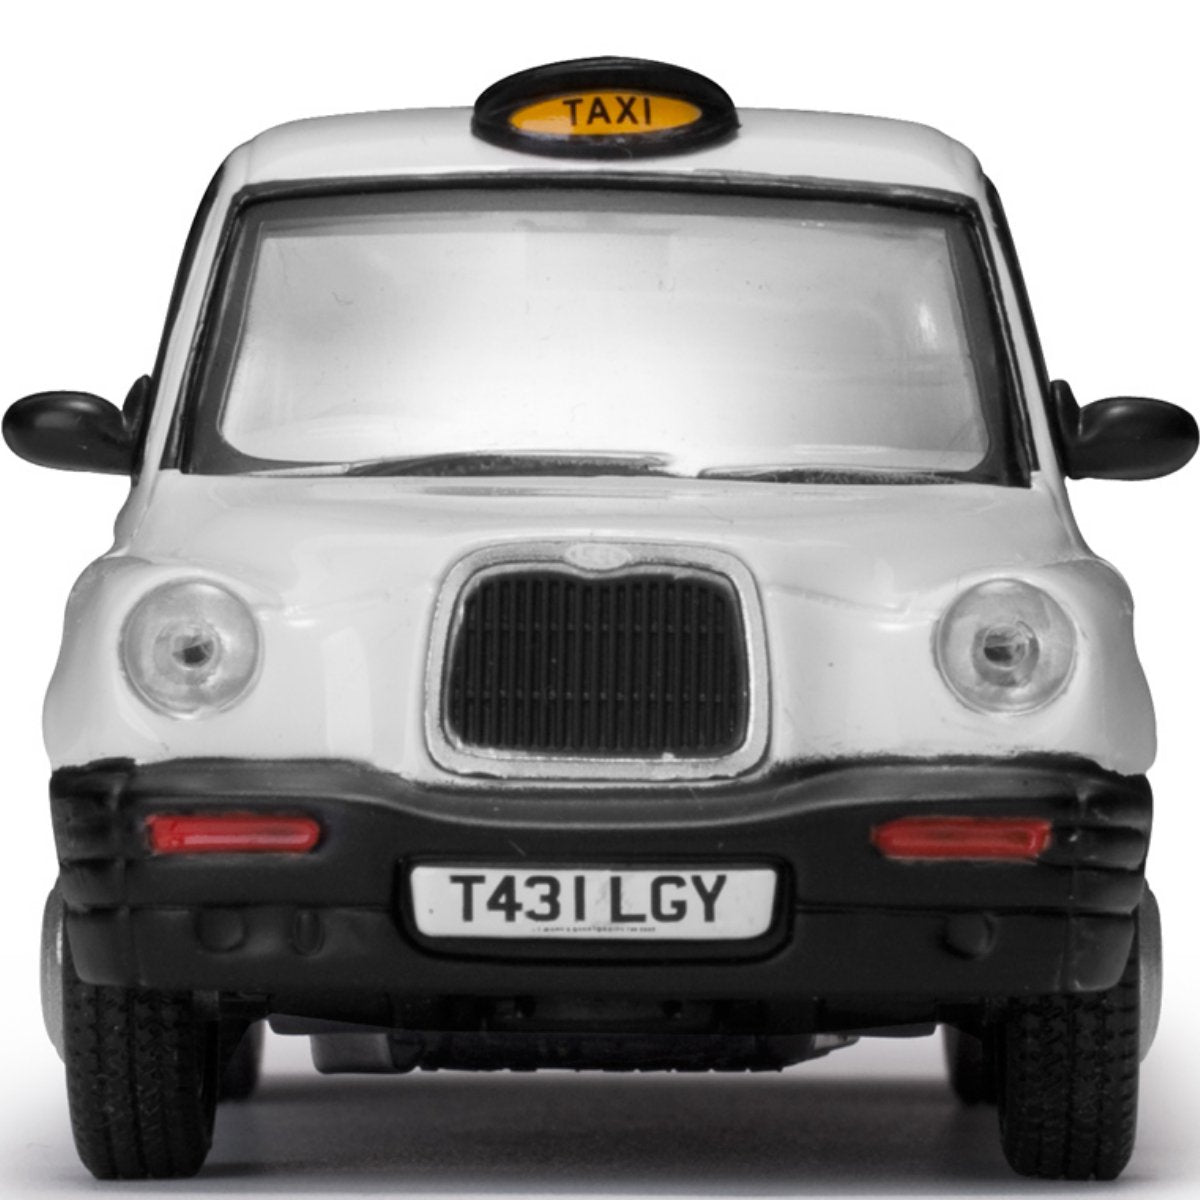 Vitesse 1998 TX1 London Taxi Cab - White - Phillips Hobbies